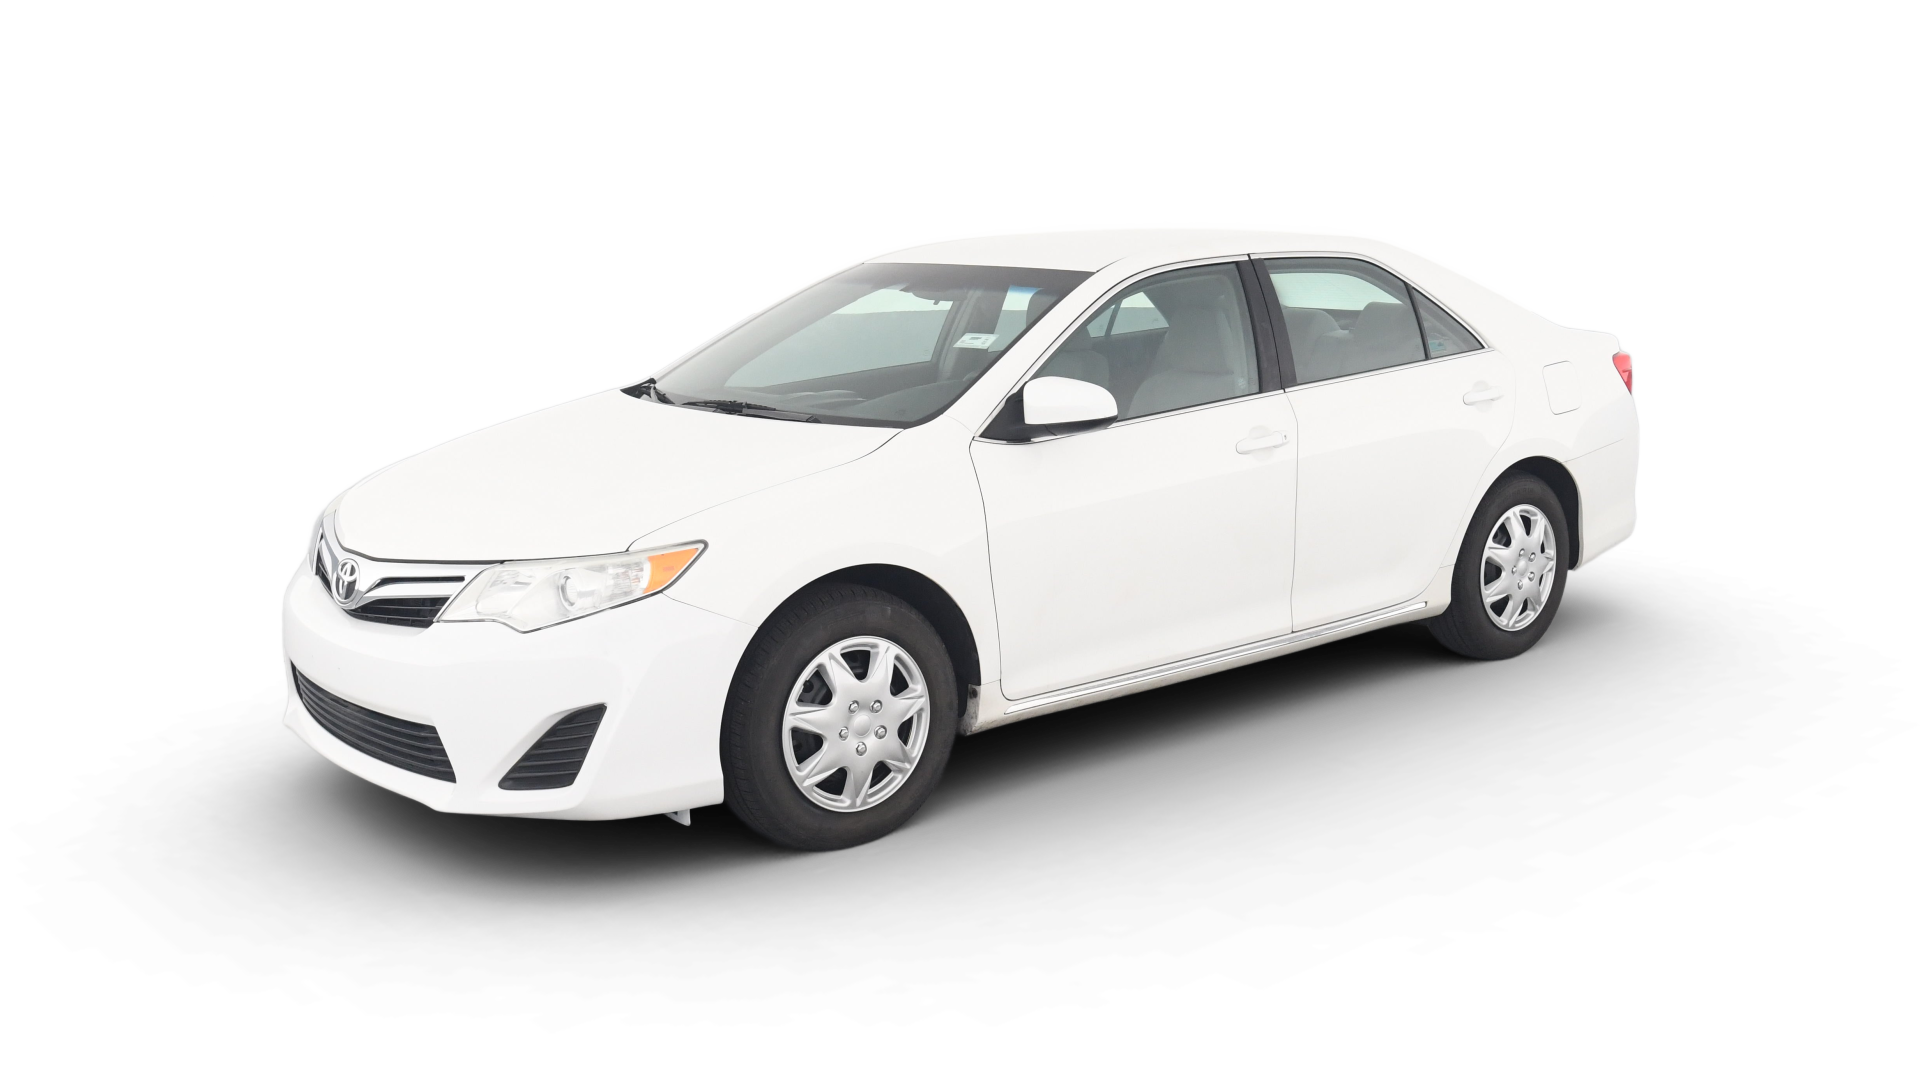 Toyota Camry Hybrid model image.